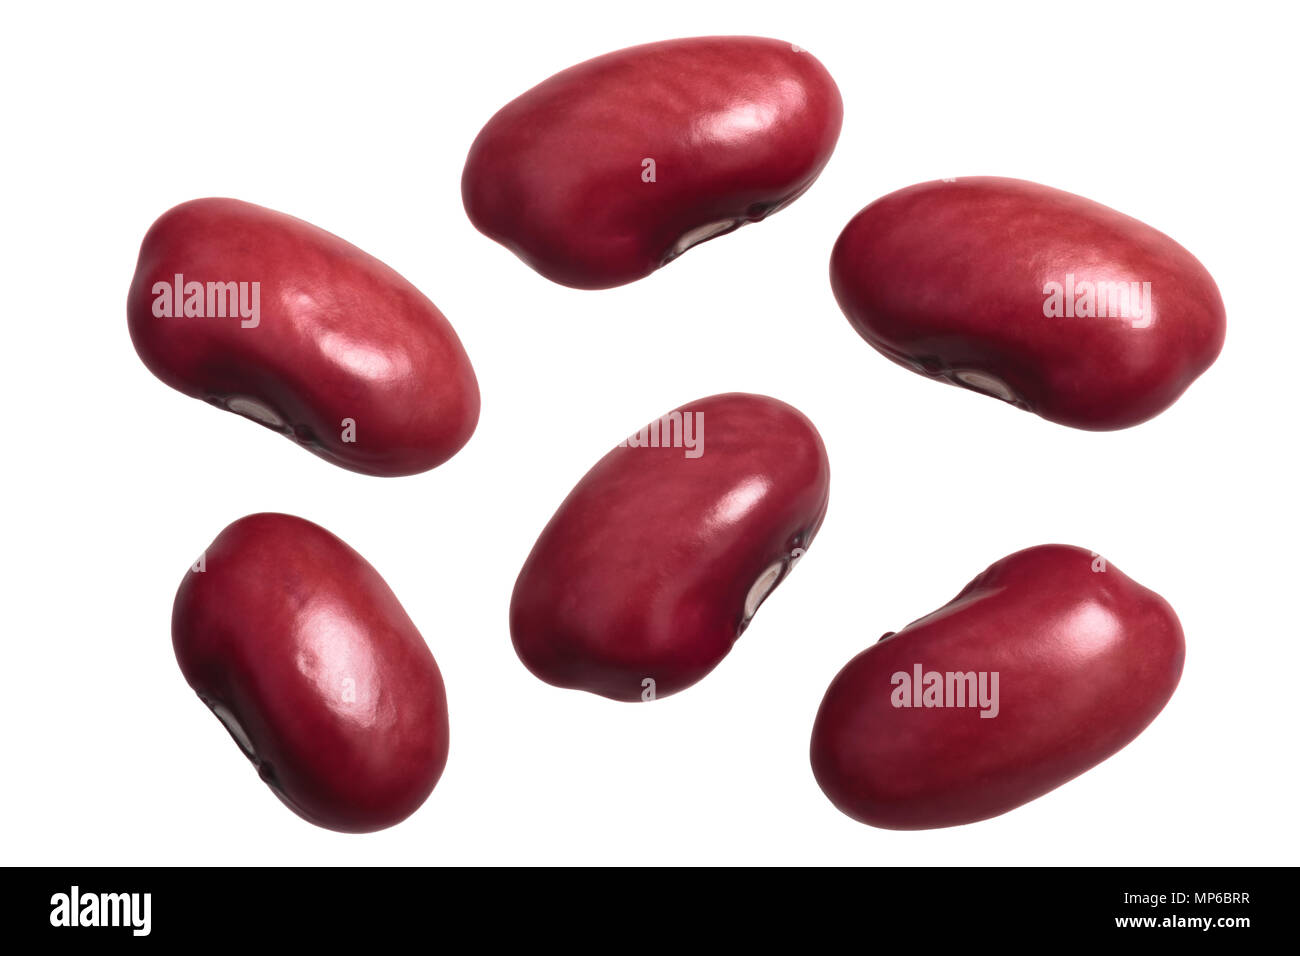 Red kidney beans (Phaseolus vulgaris), fresh seeds, top view Stock Photo